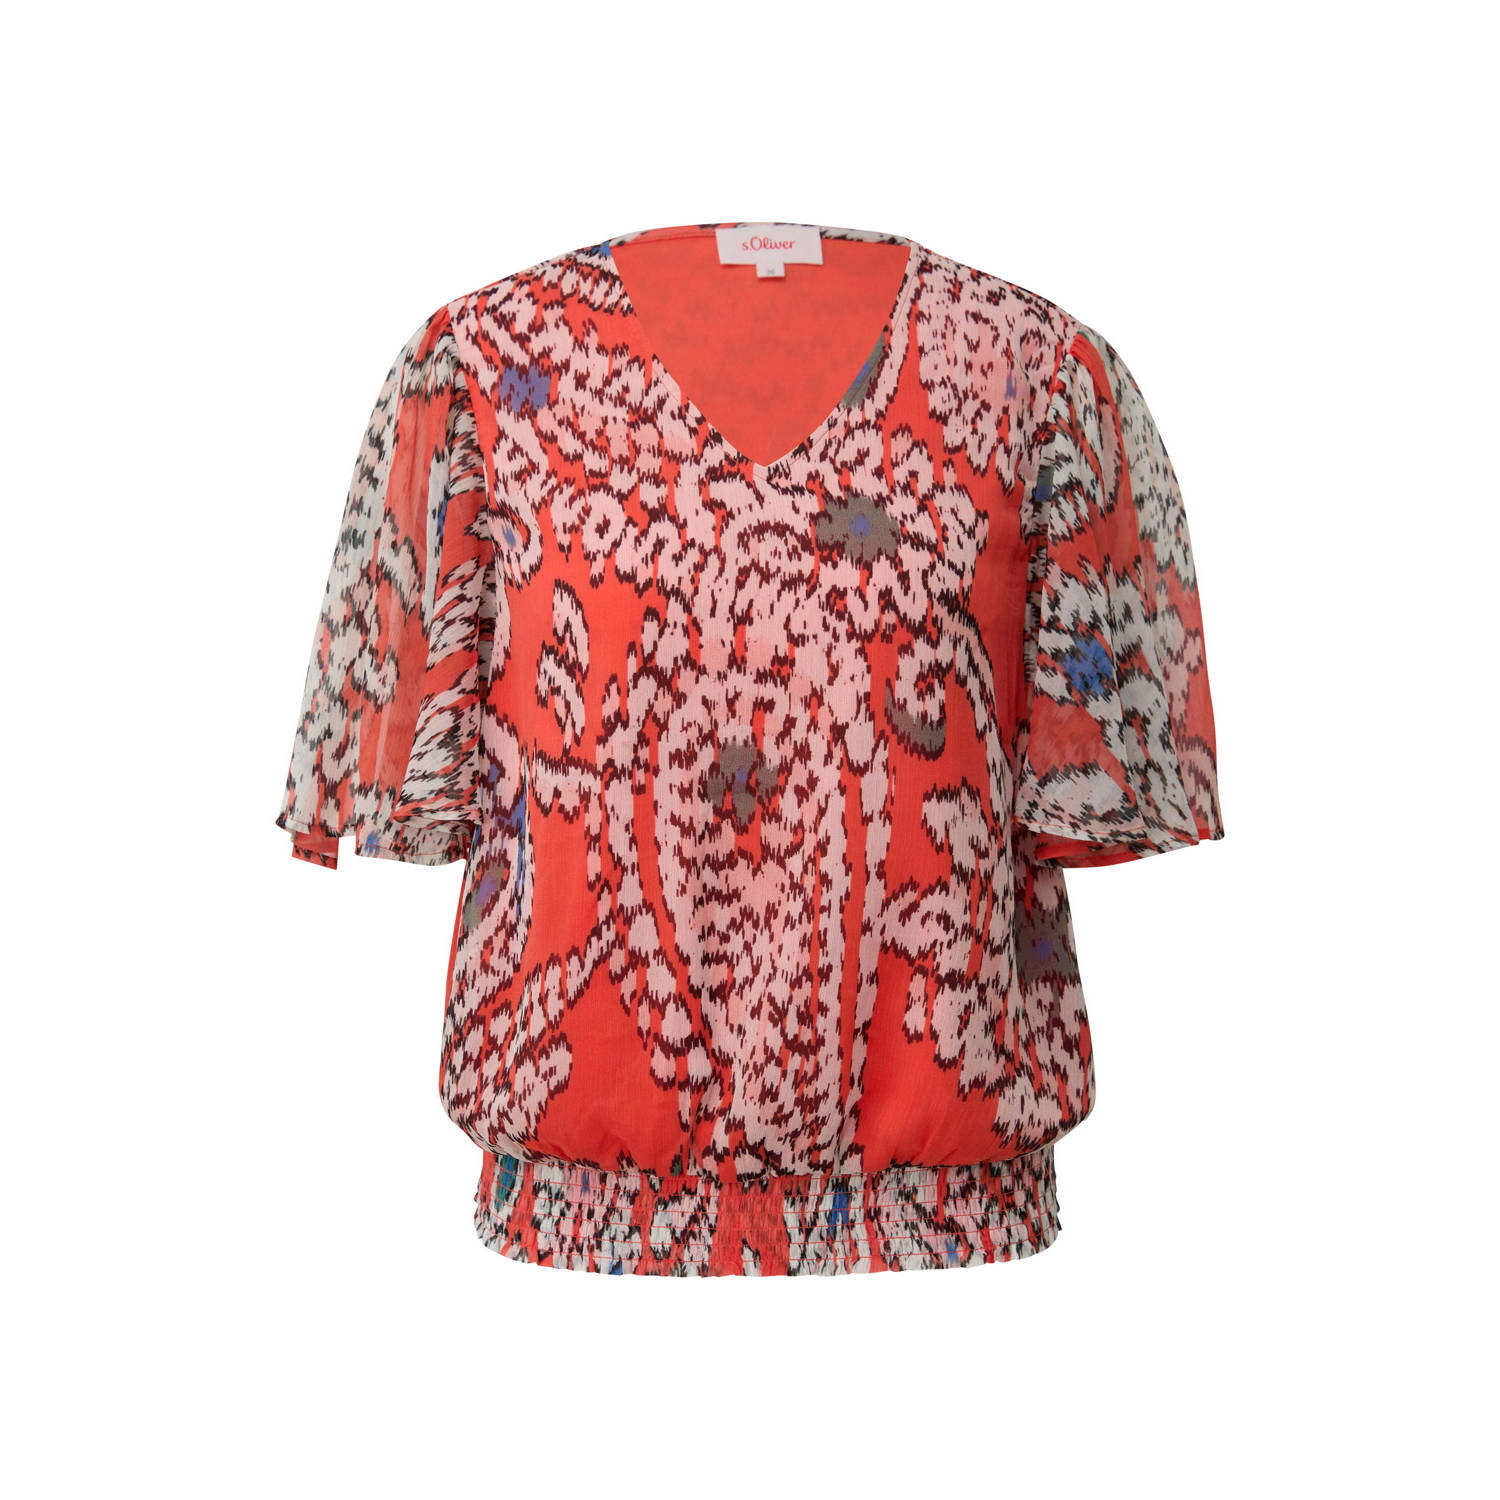 S.Oliver blousetop met all over print koraalrood multi